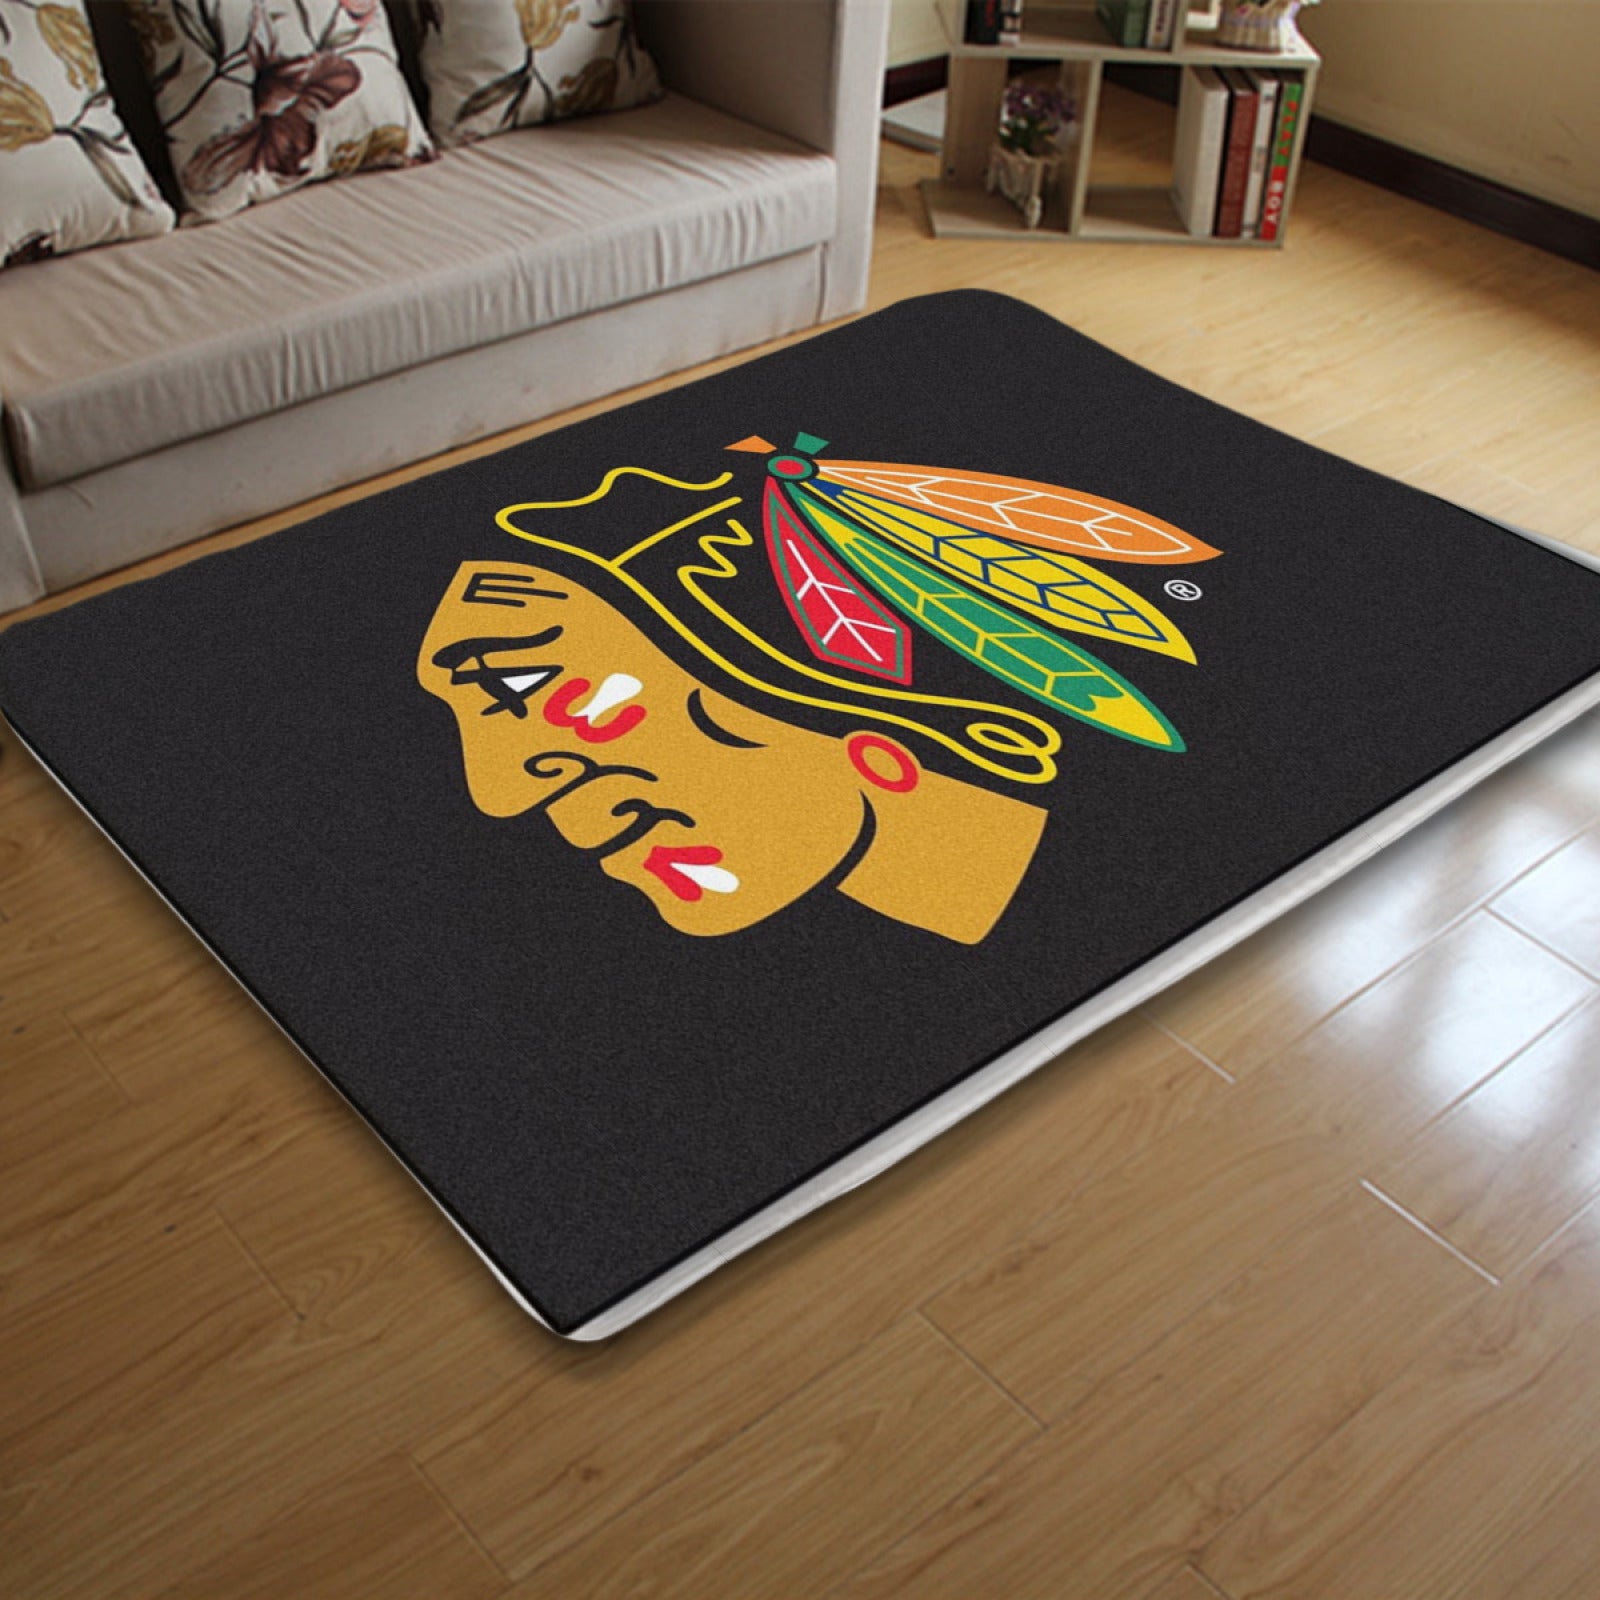 Chicago Hockey League Blackhawks Carpet Living Room Bedroom Mats Kitchen Bathroom Rugs